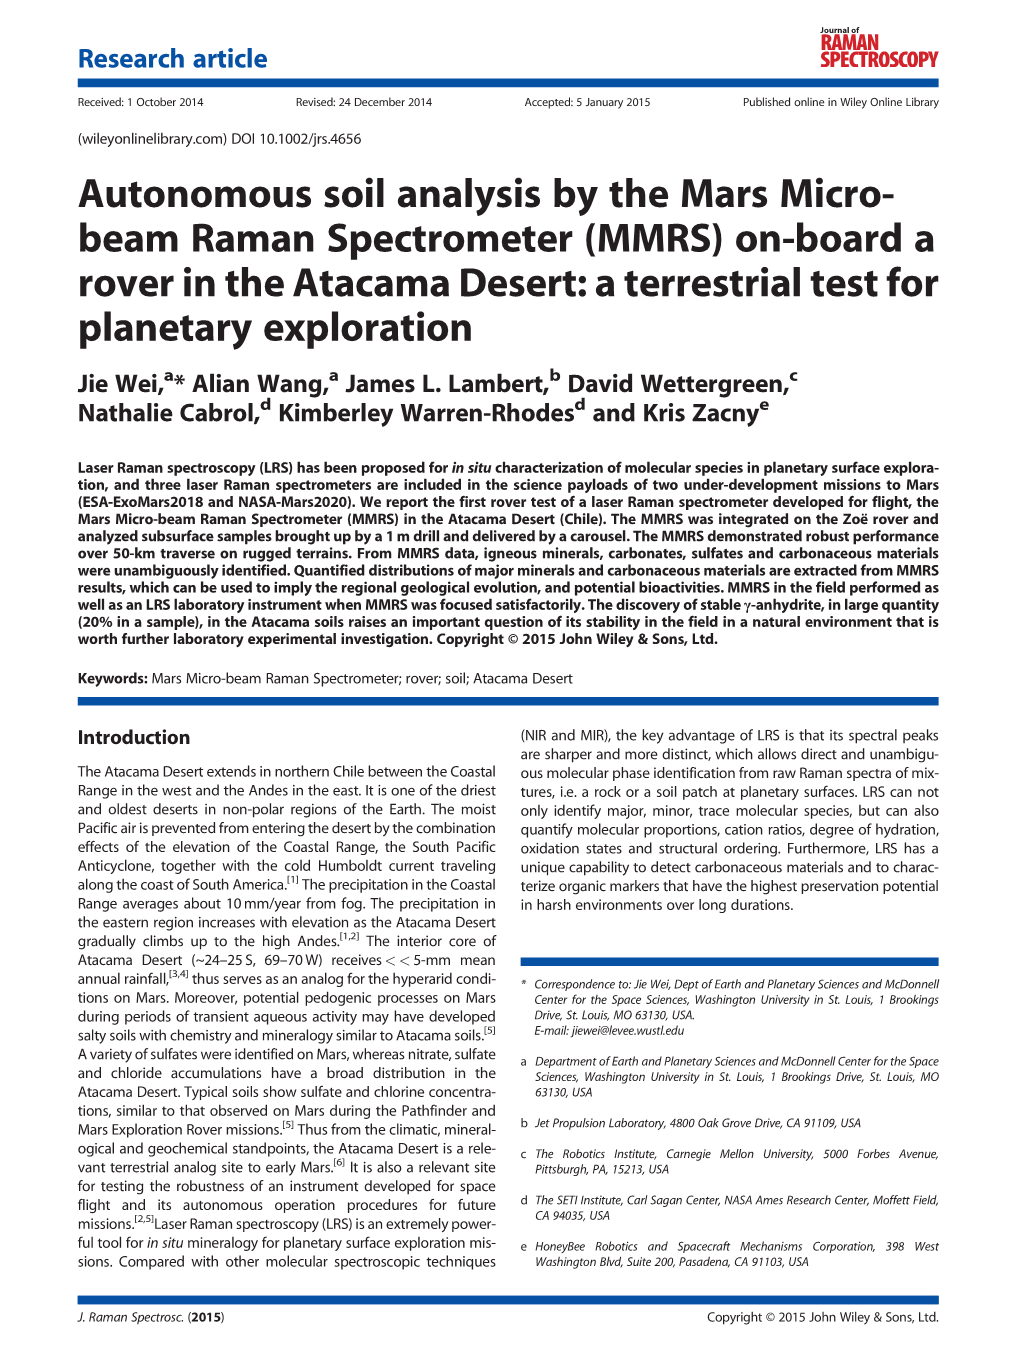 Autonomous Soil Analysis by the Mars Micro-Beam Raman Spectrometer